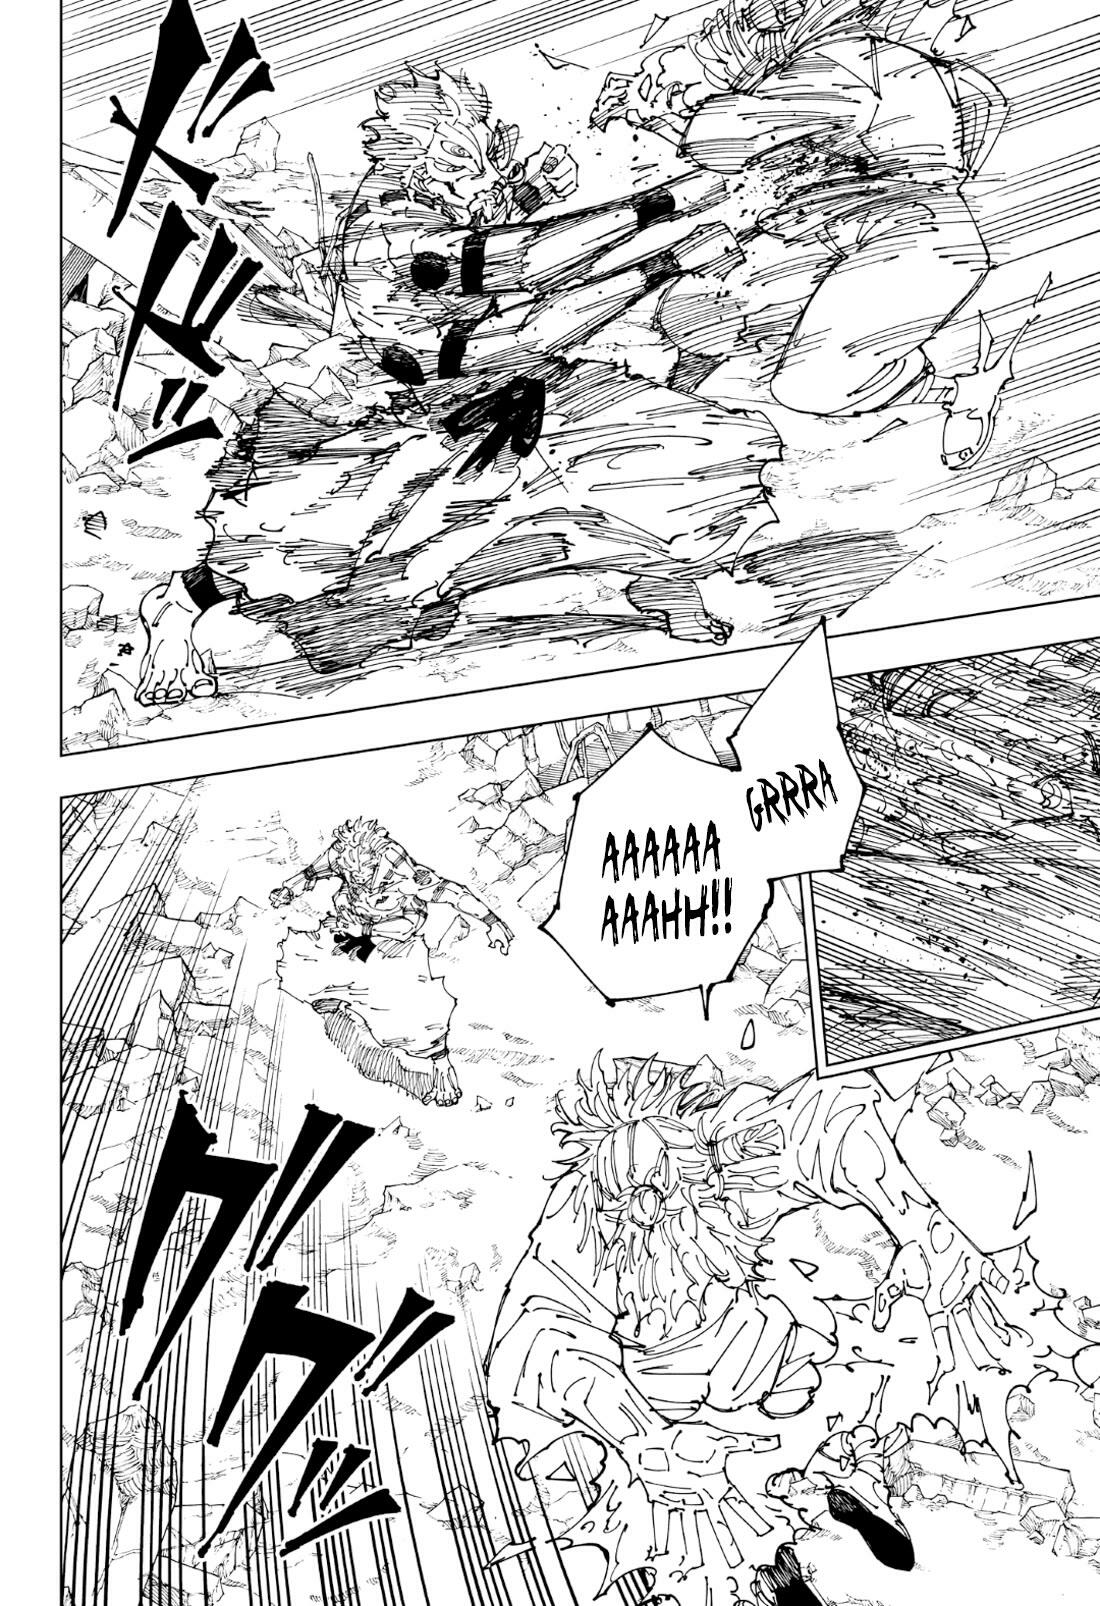 Jujutsu Kaisen Chapter 238: Chapter 238: The Decisive Battle In The Uninhabited, Demon-Infested Shinjuku ⑮ page 6 - Mangakakalot